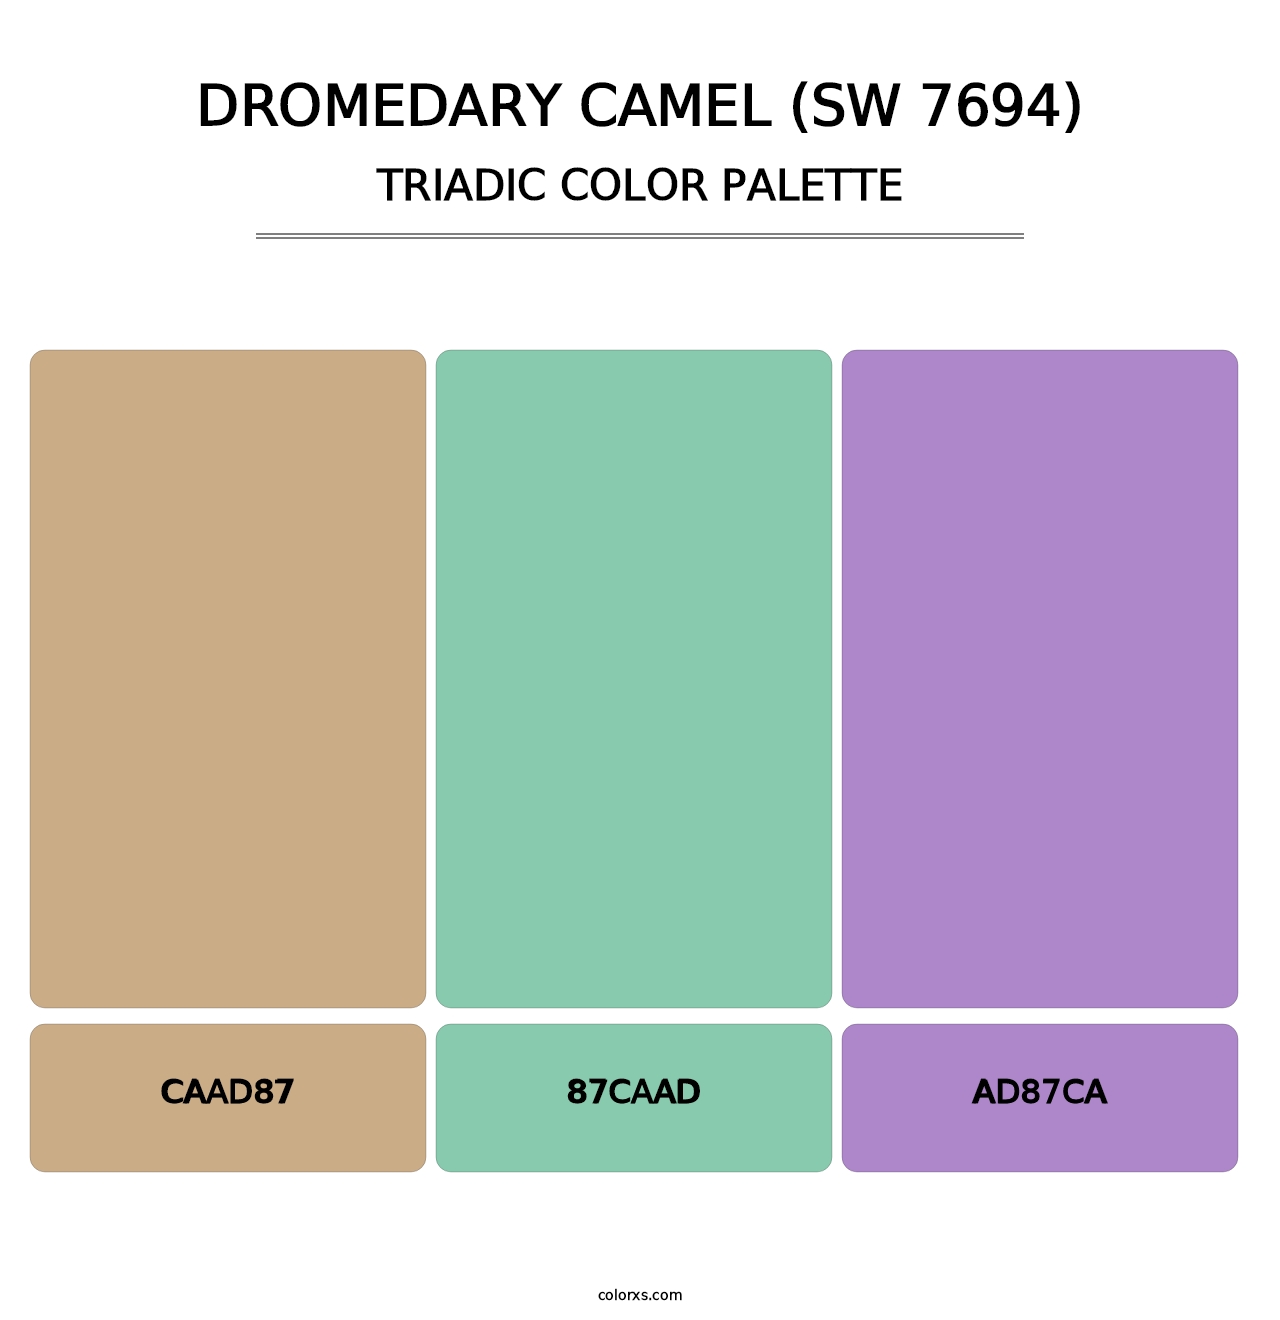 Dromedary Camel (SW 7694) - Triadic Color Palette